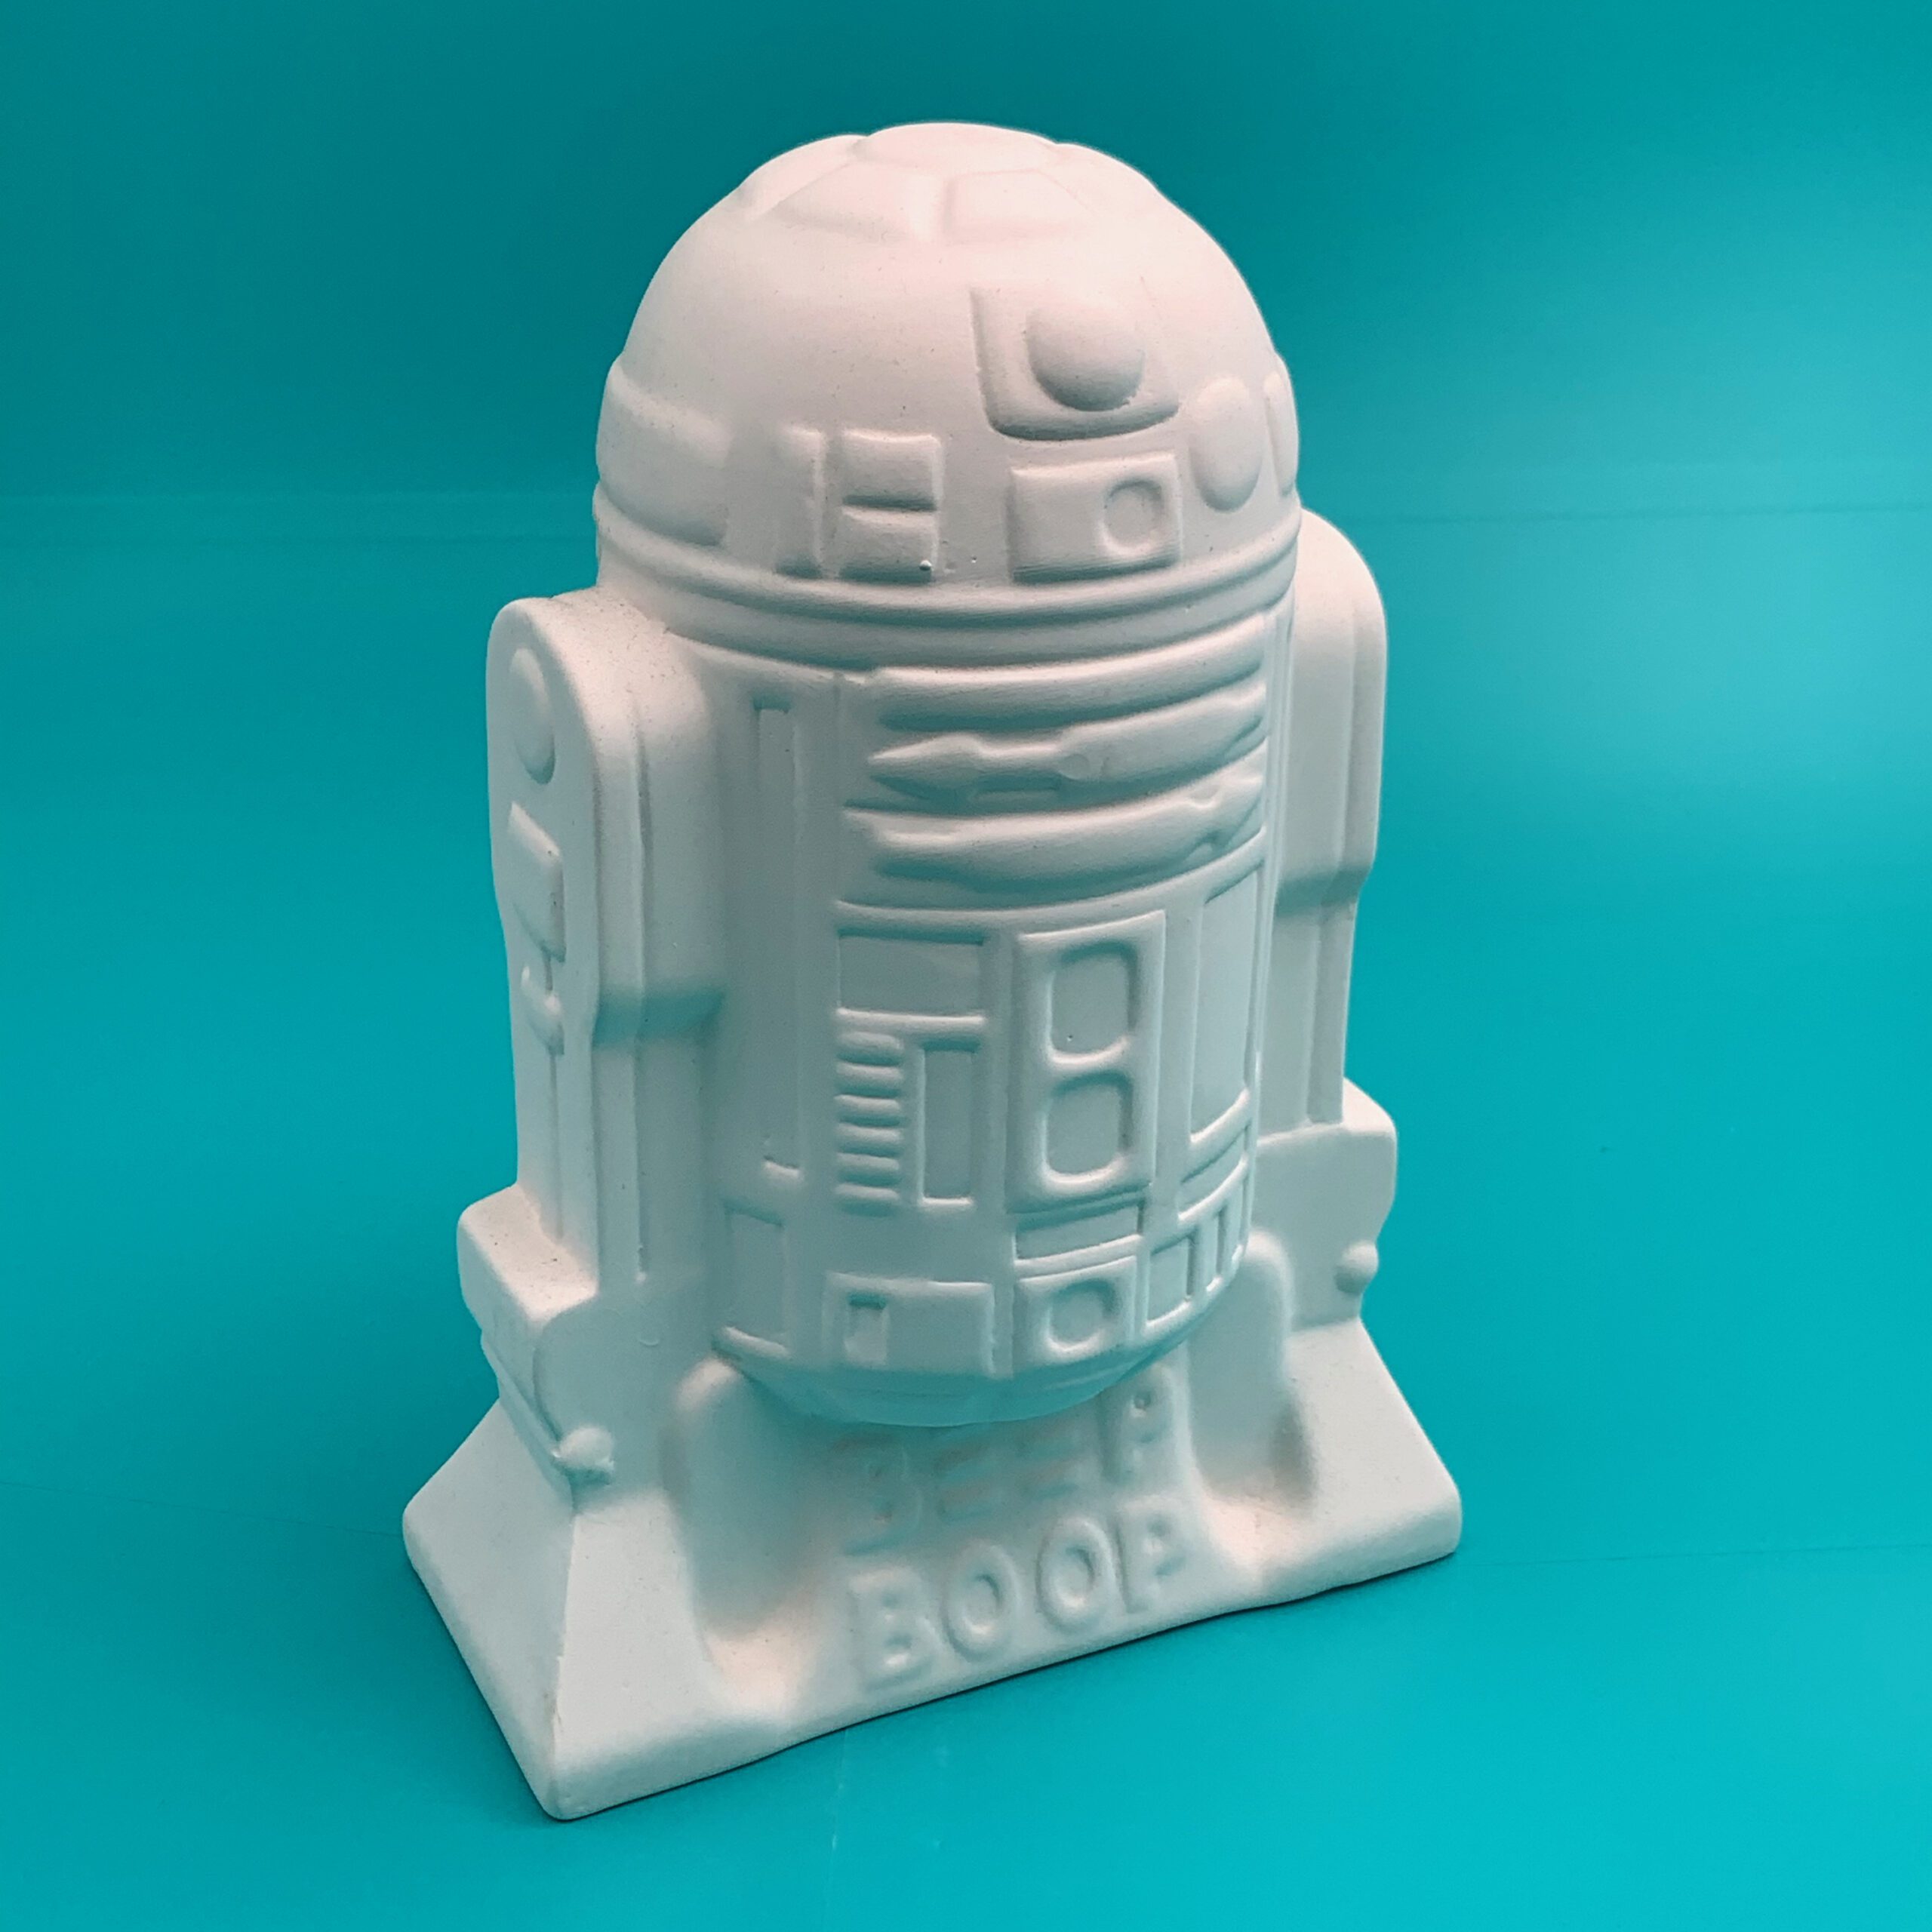 Star Wars R2-D2 money bank ceramics kit paint at home with Create Art Studio